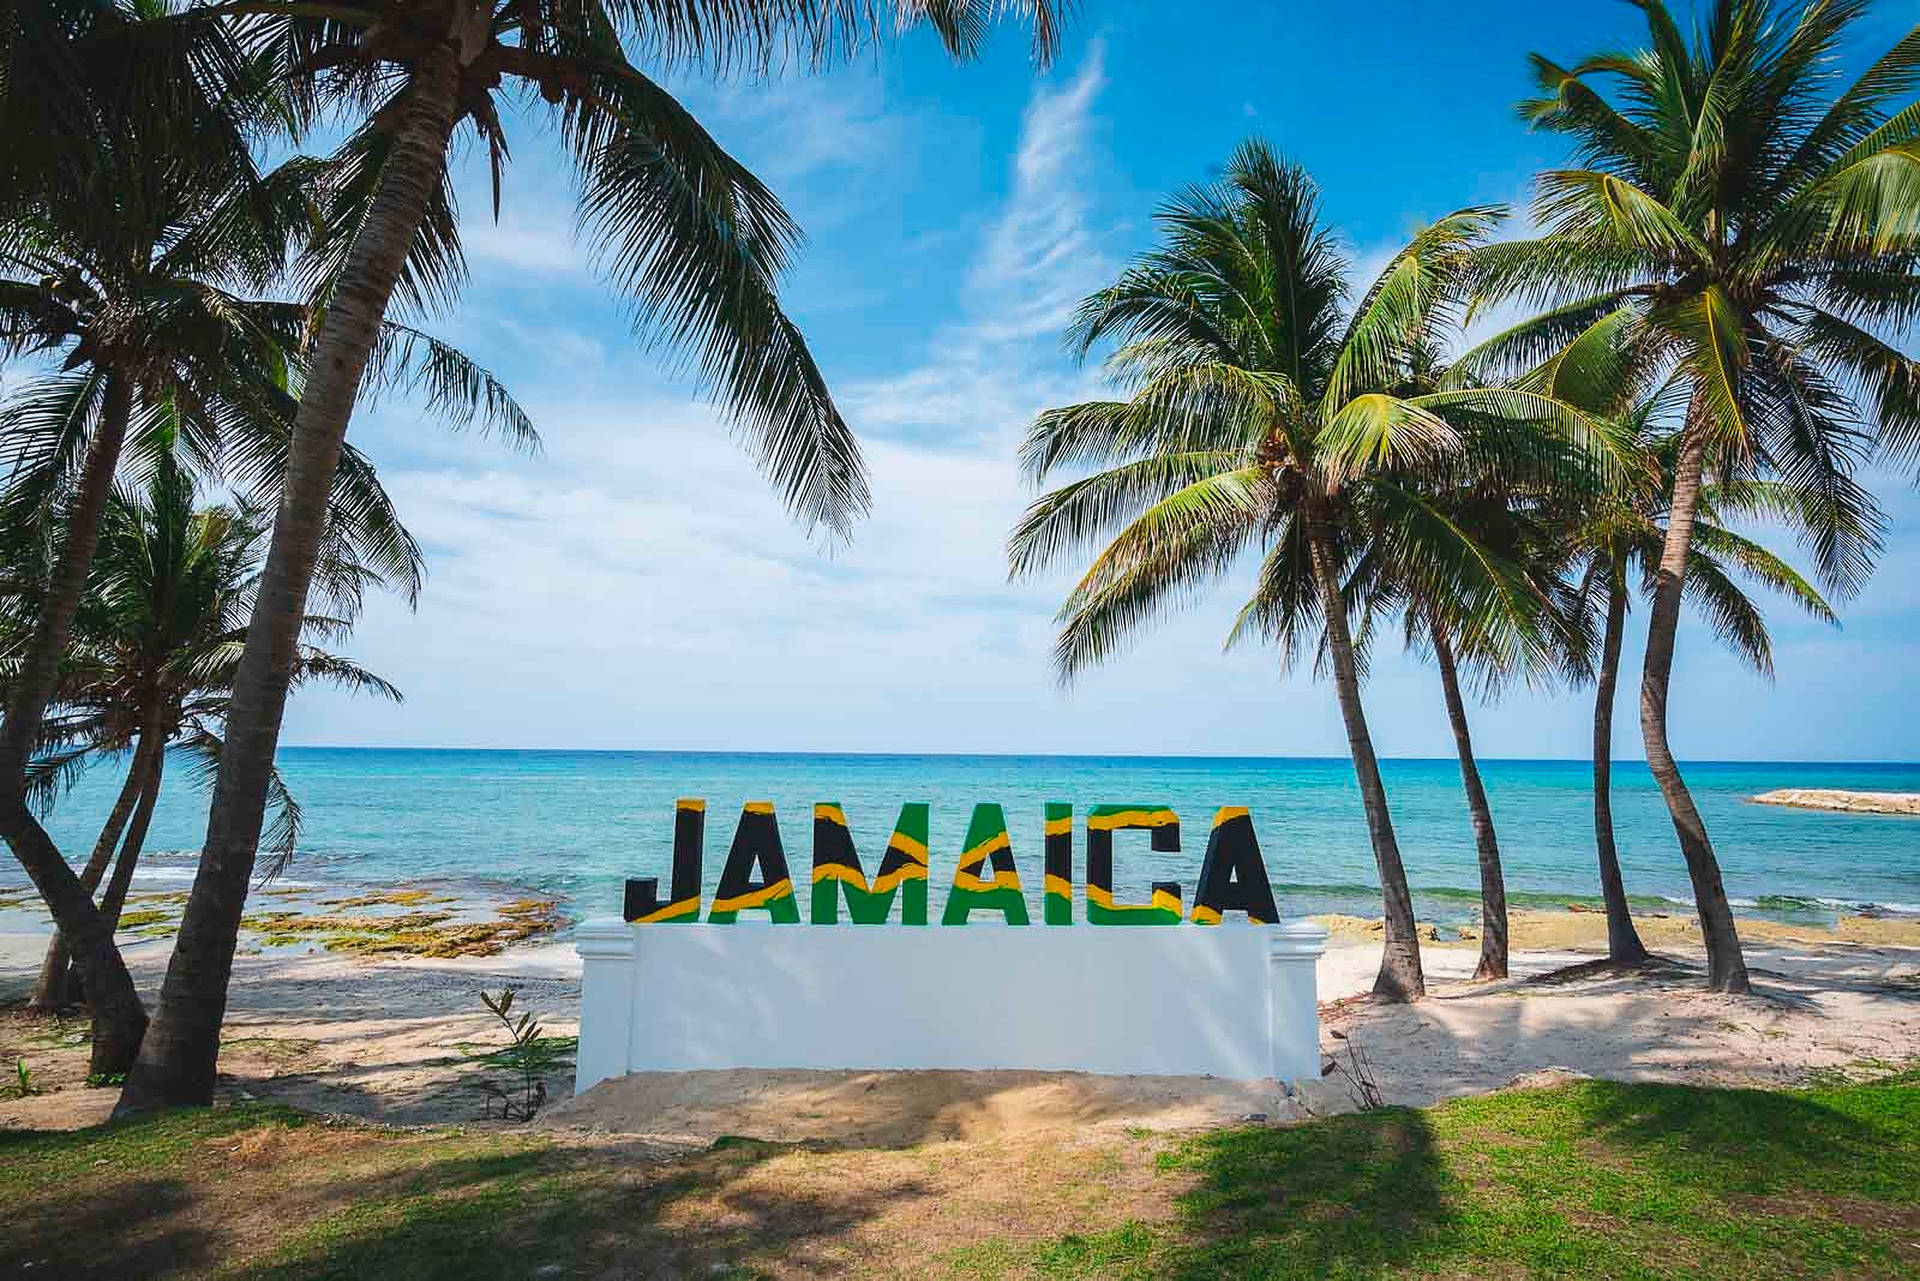 details-66-jamaica-wallpaper-latest-in-cdgdbentre